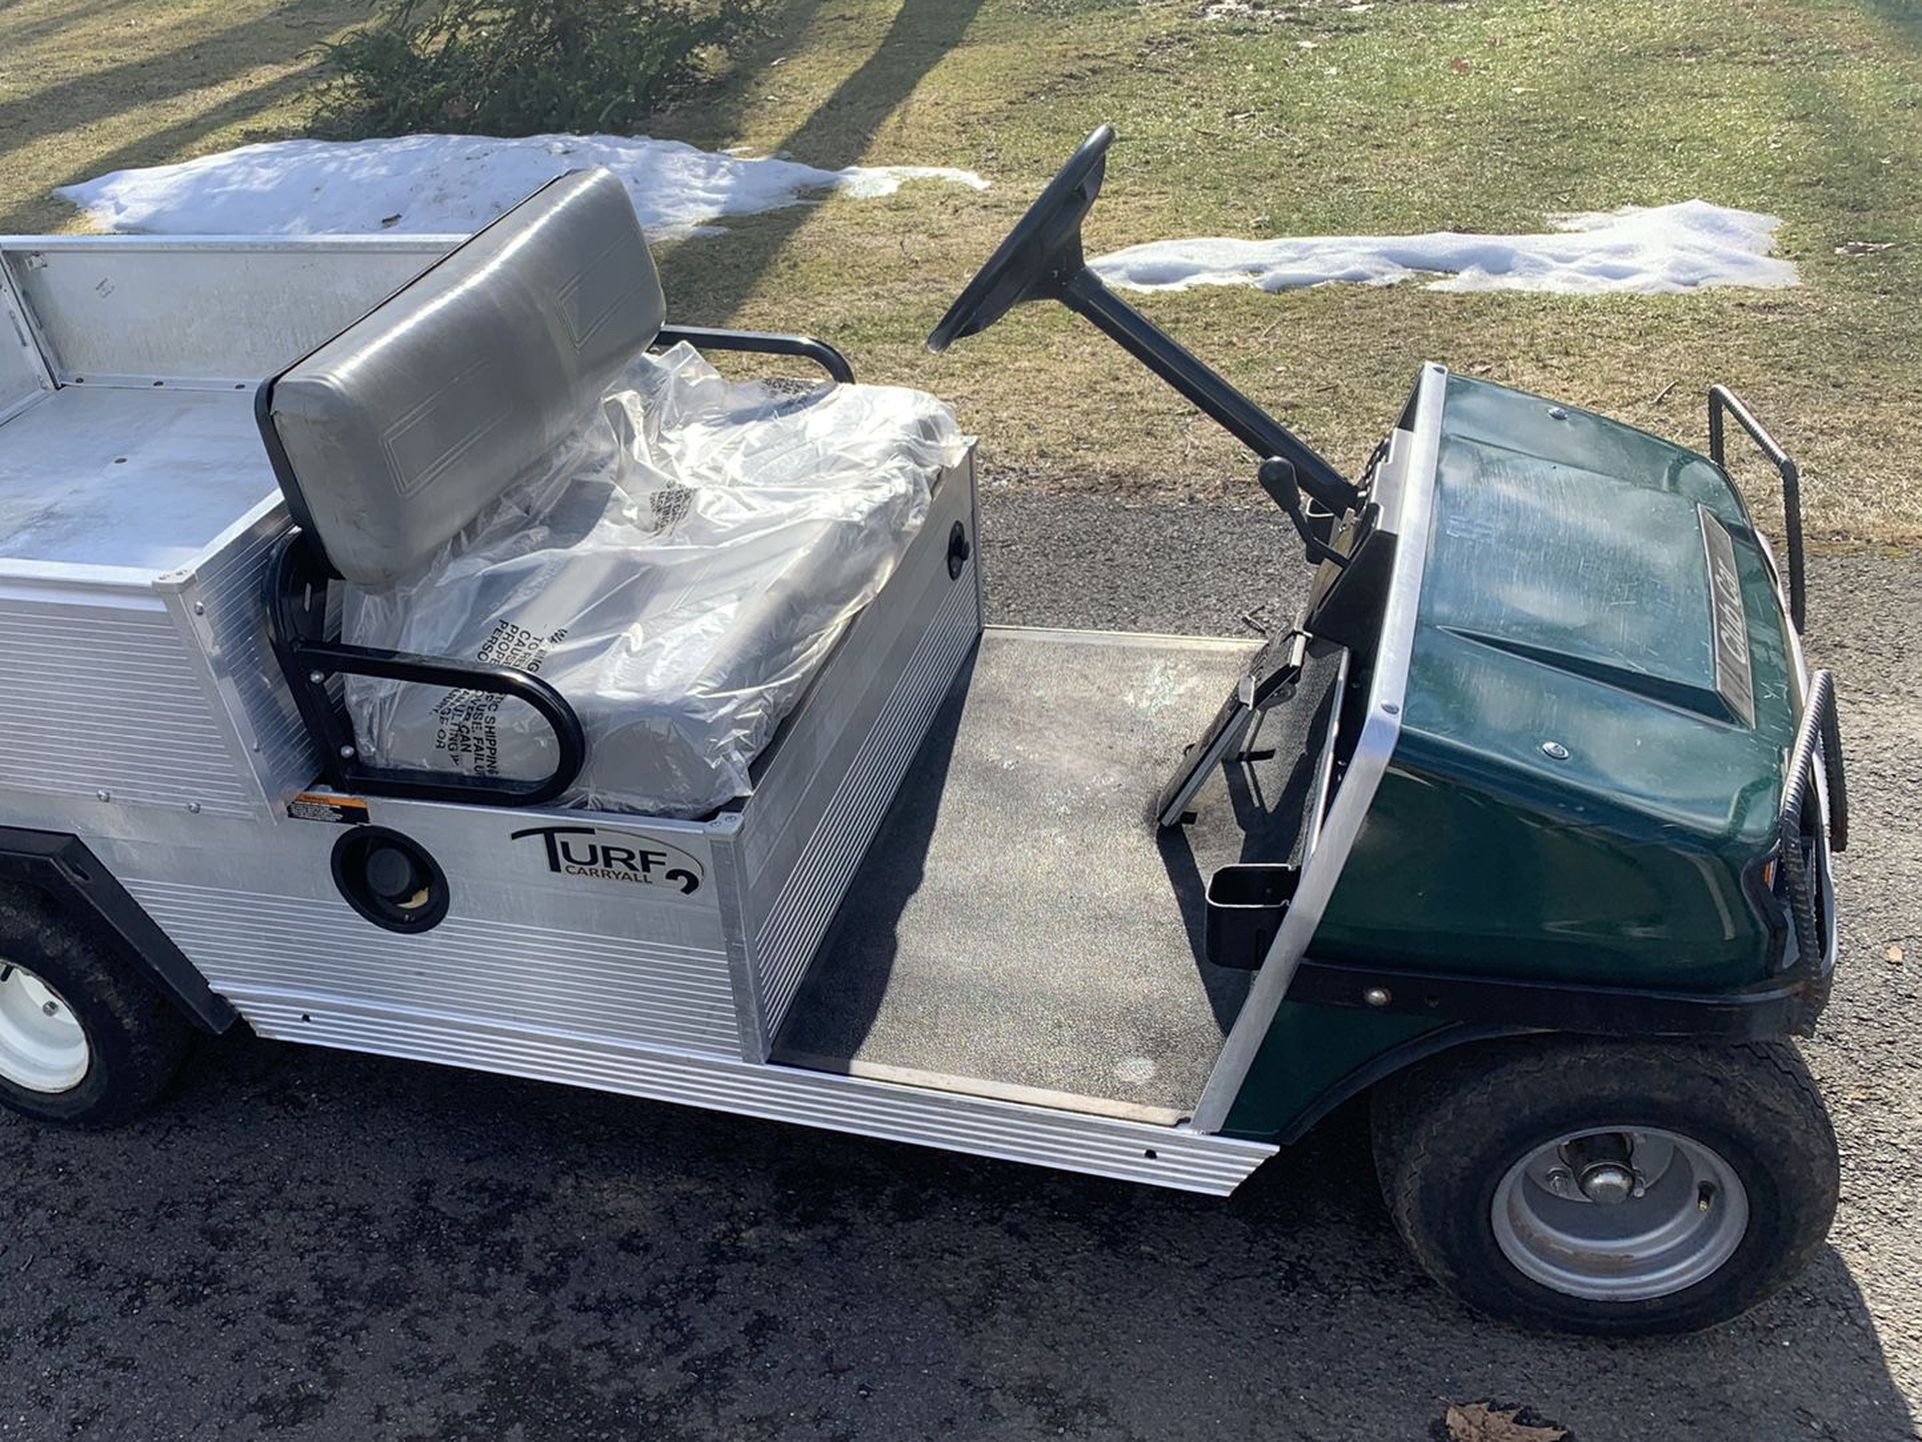 Utility Golf Cart